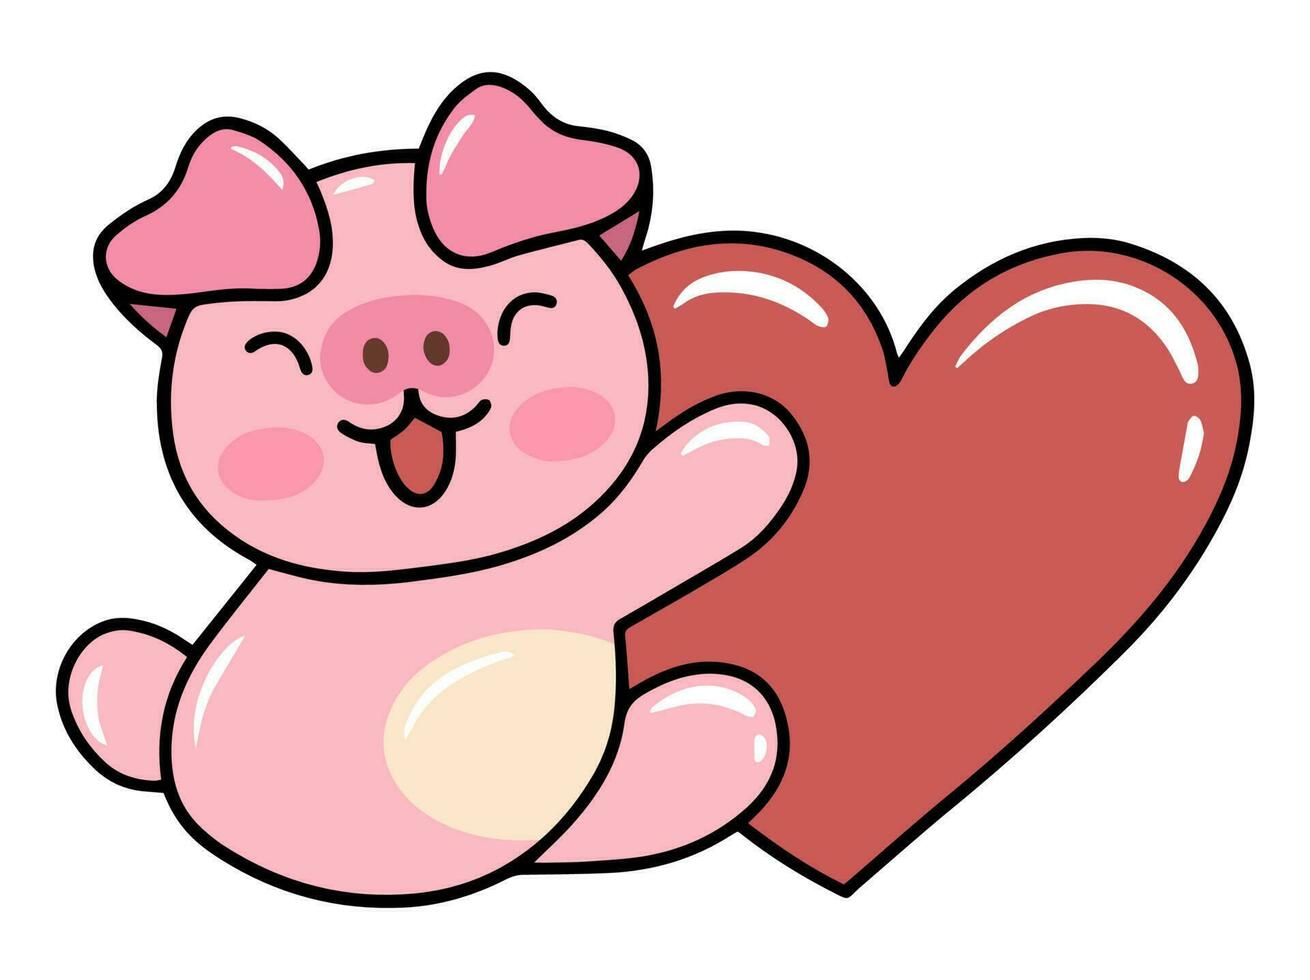 Cute cartoon Pig drawing illustration vector